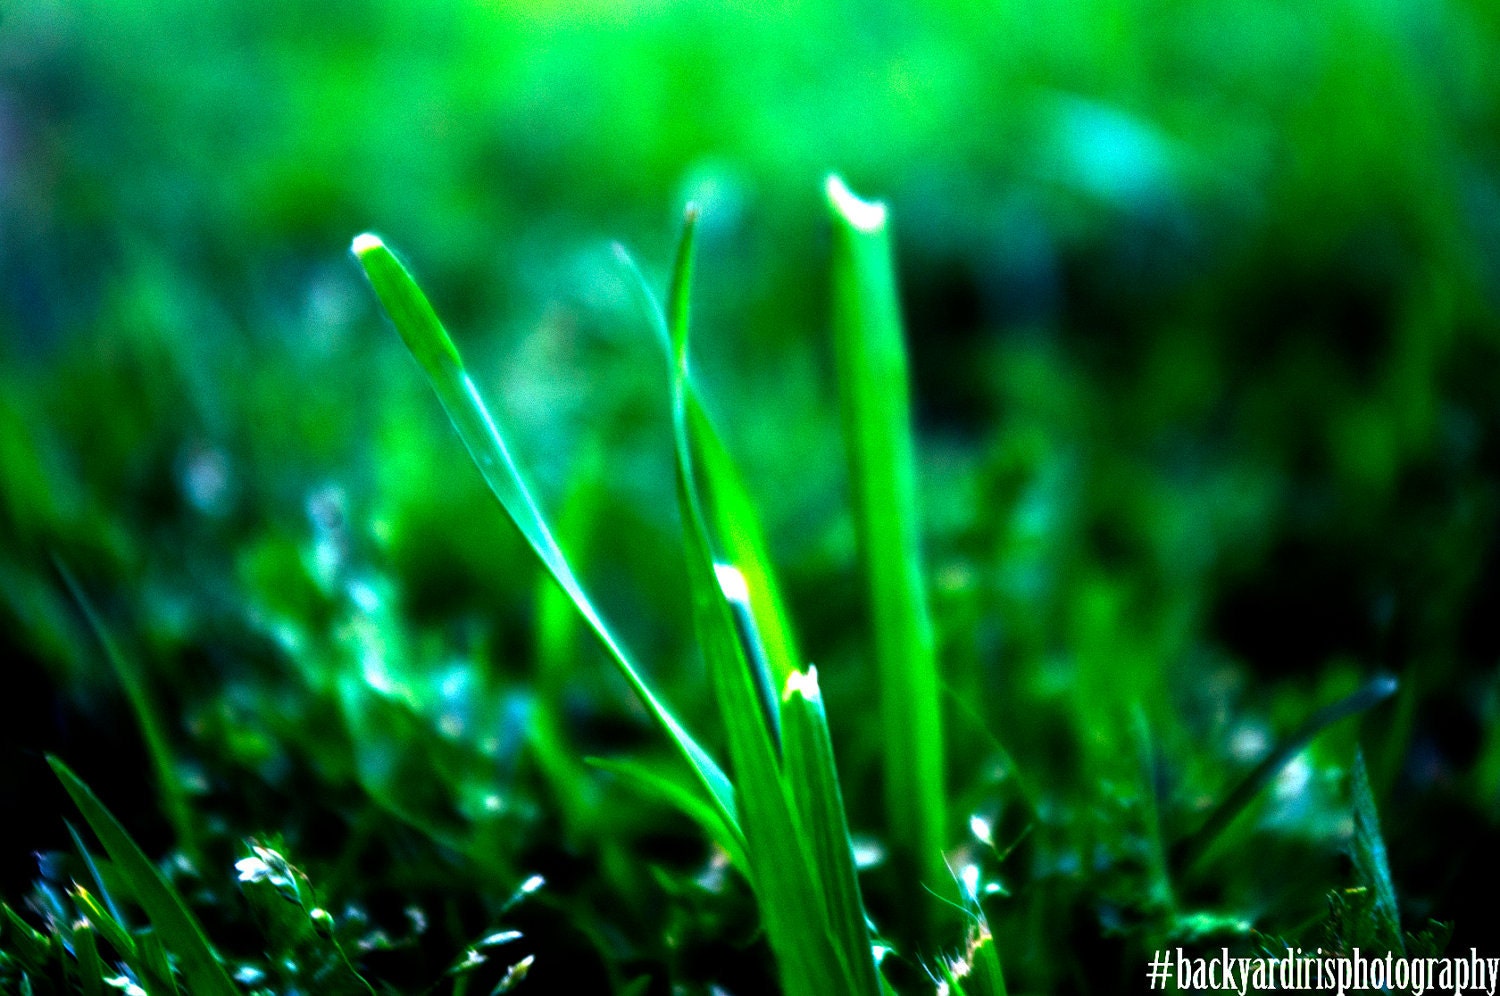 Nature Photography: Vivid Green Grass, Backyard Photography - backyardiris